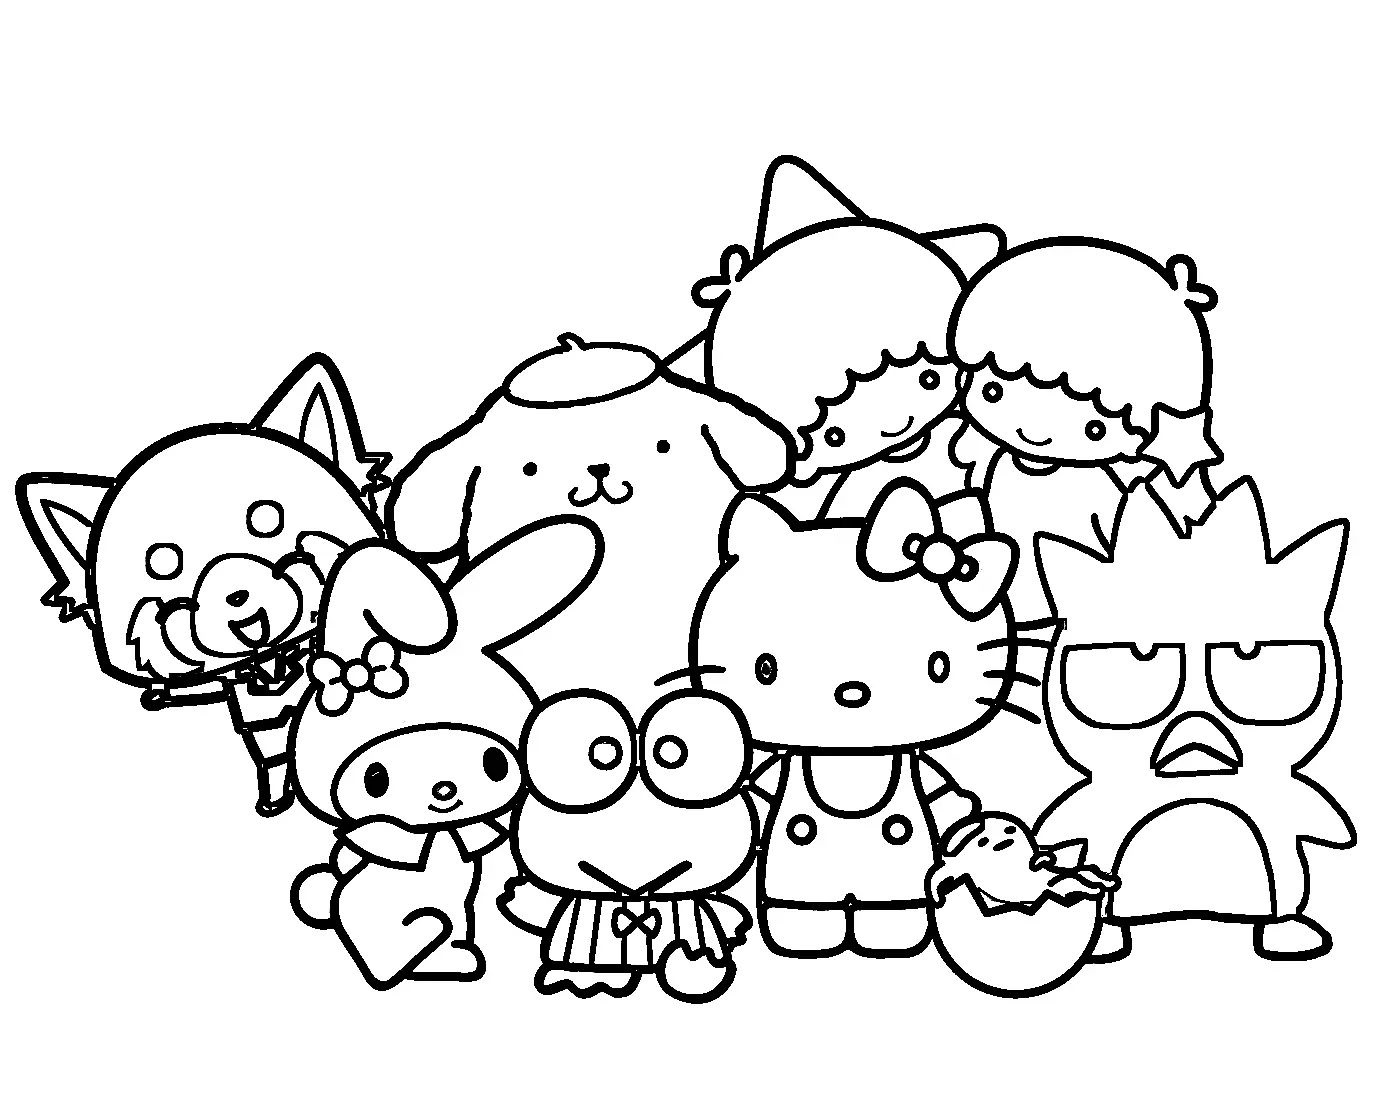 Printable Sanrio Hello Kitty Coloring Page for kids.